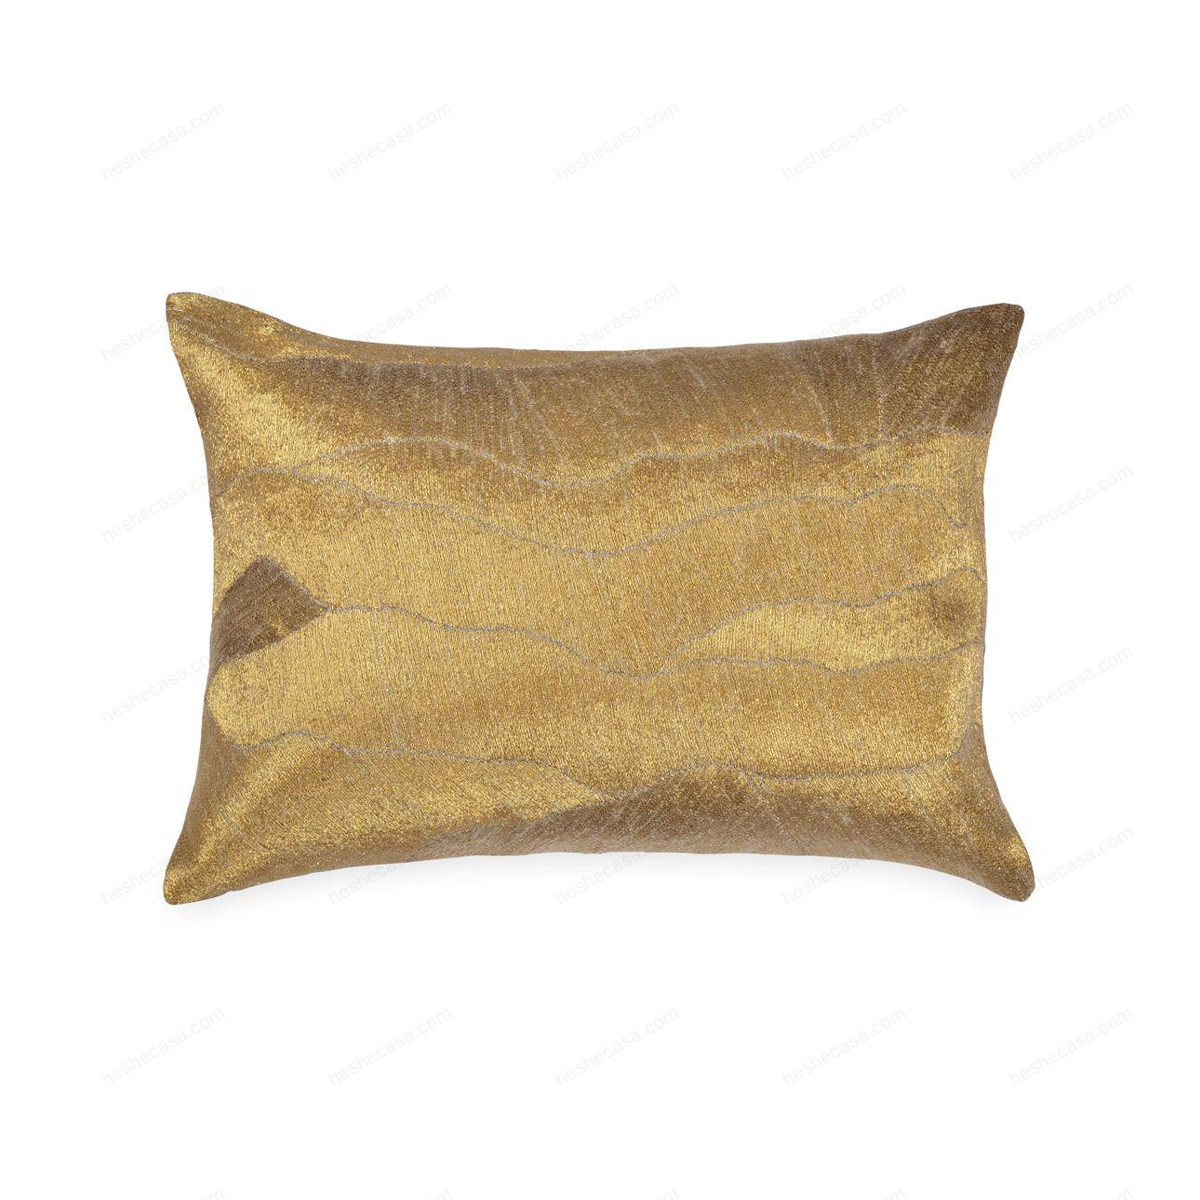 After The Storm Gold Decorative Pillow靠垫